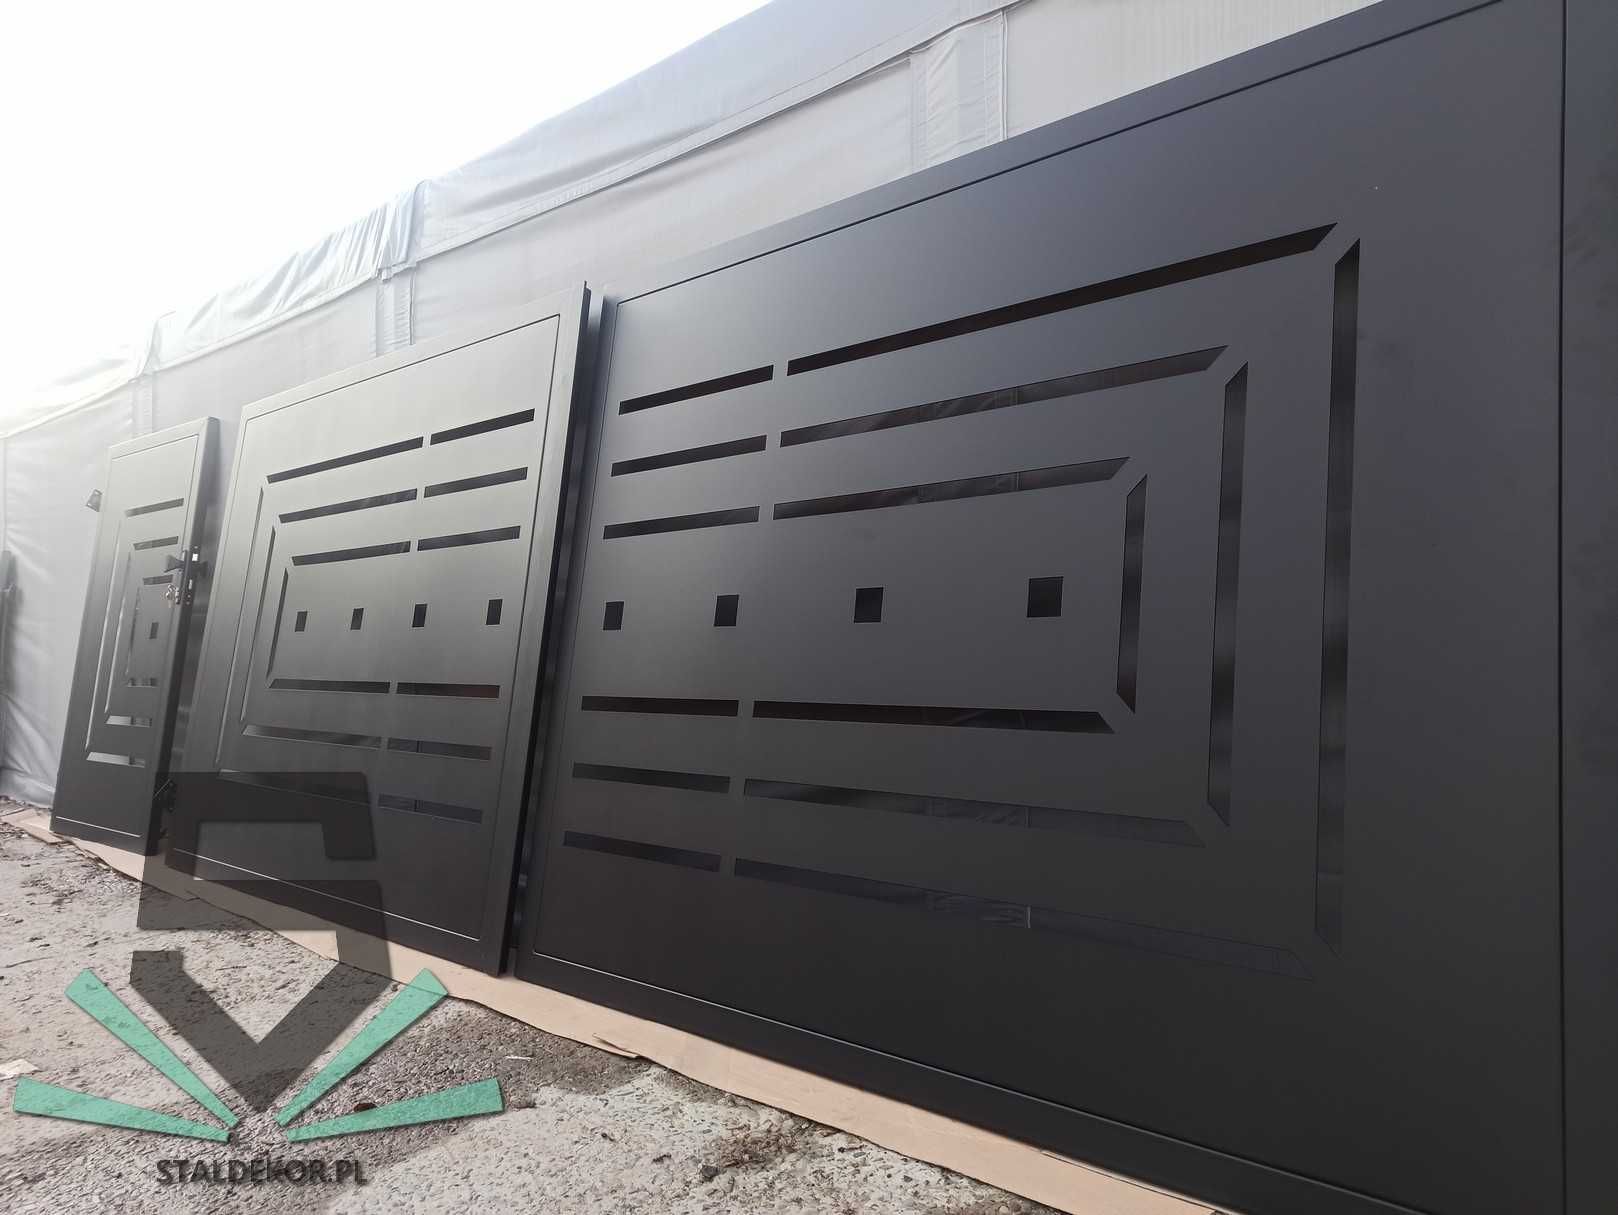 Brama dwuskrzydłowa 4m, 5m, 6m, wycinana laserowo CNC, panelowa.